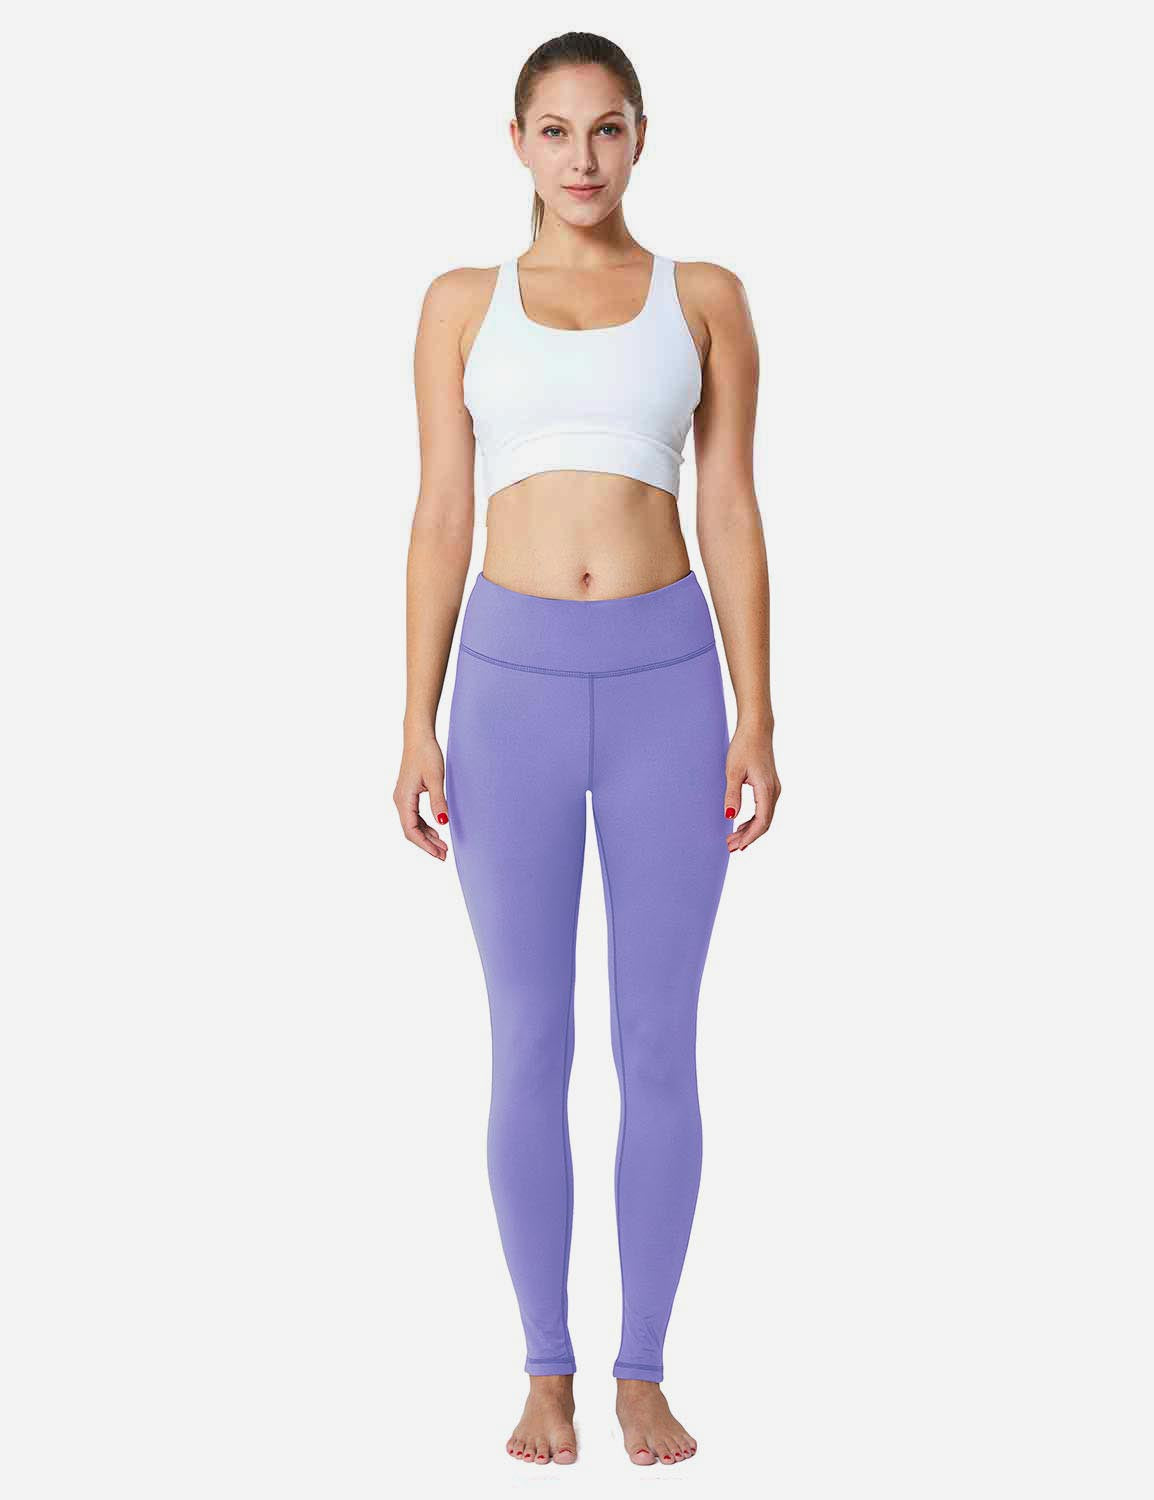 Baleaf Women's Mid-Rise Fleece Lined Basic Yoga & Workout Leggings abh018 Paisley-Purple Full